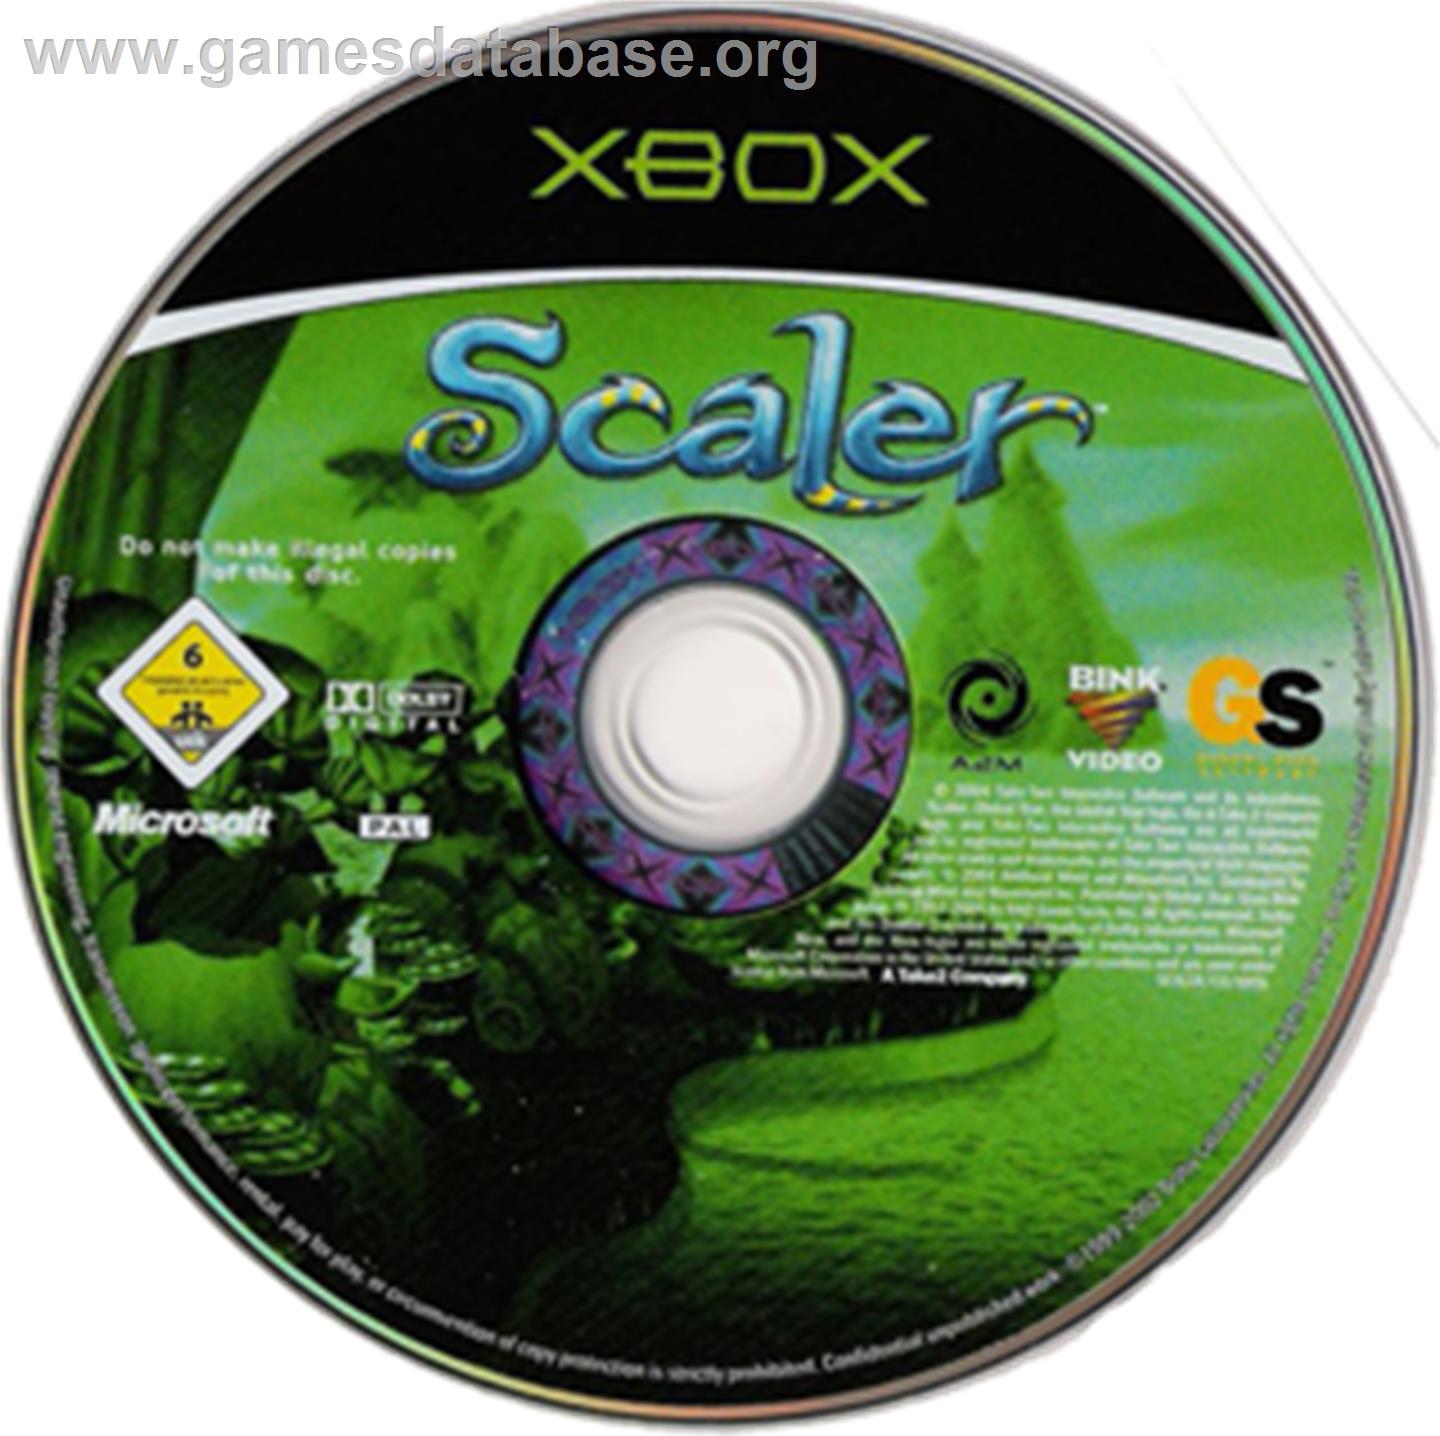 Scaler - Microsoft Xbox - Artwork - CD